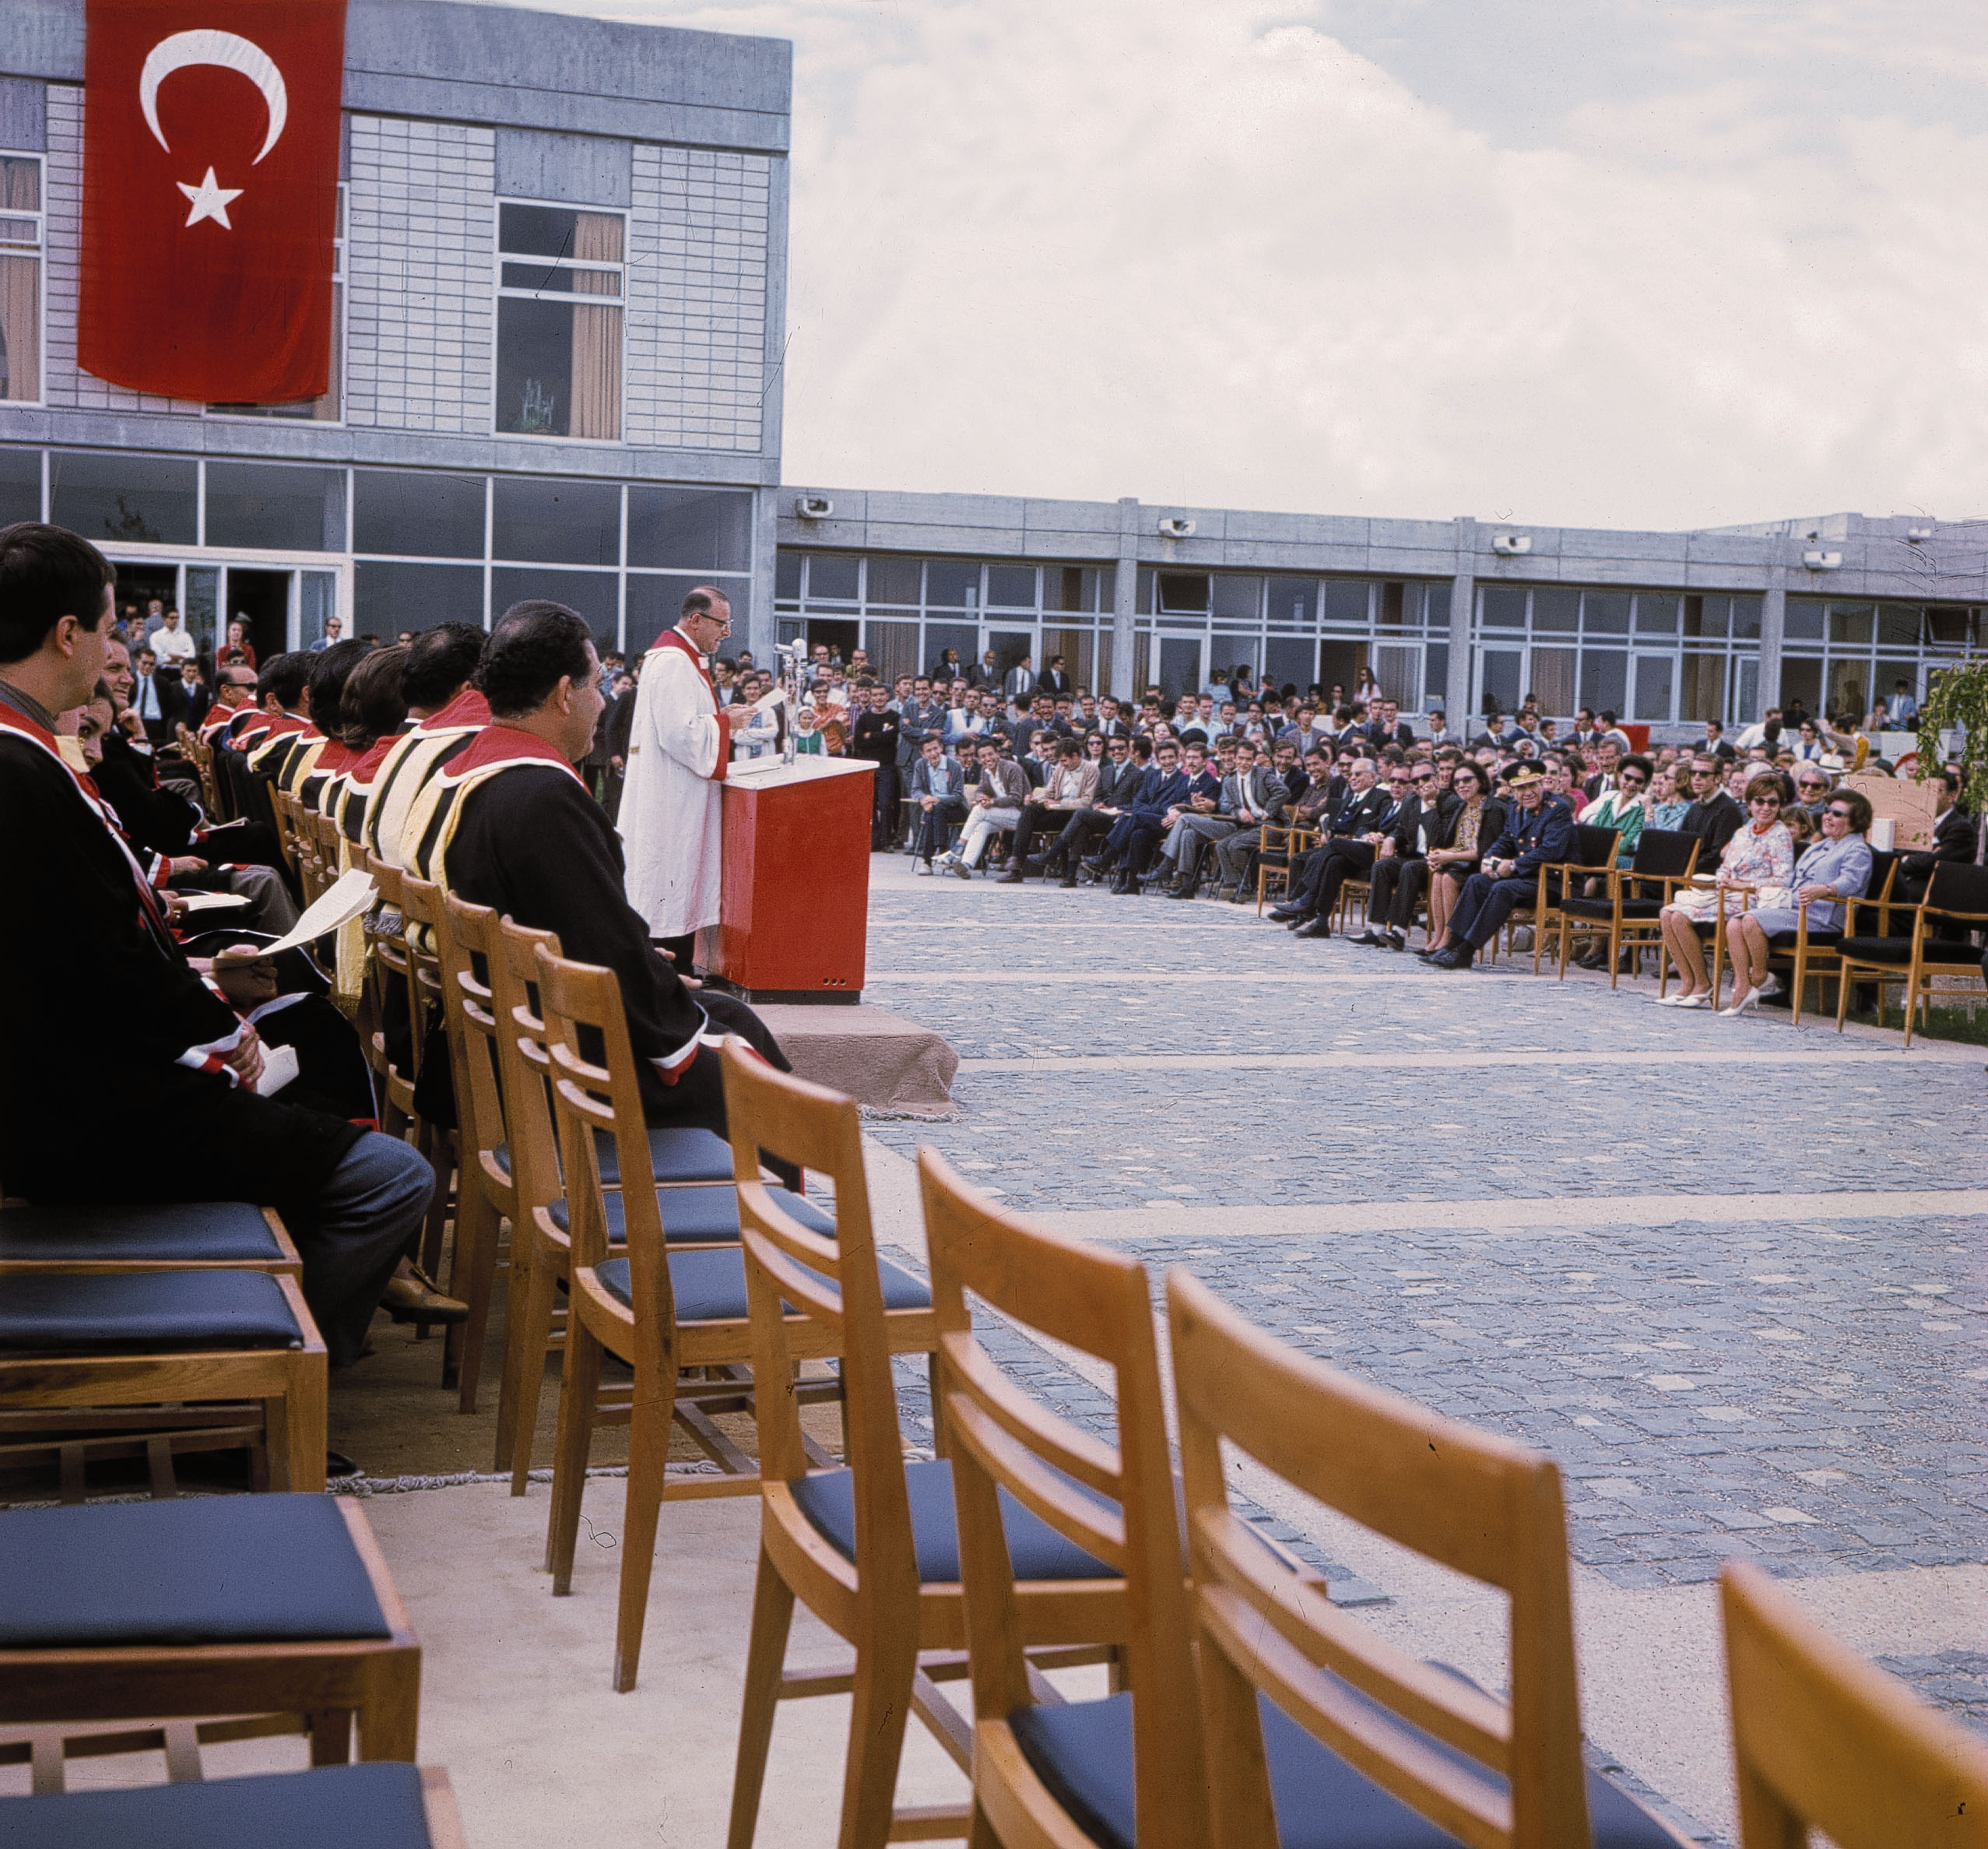 Scenes from METU Graduation Ceremony in 1967